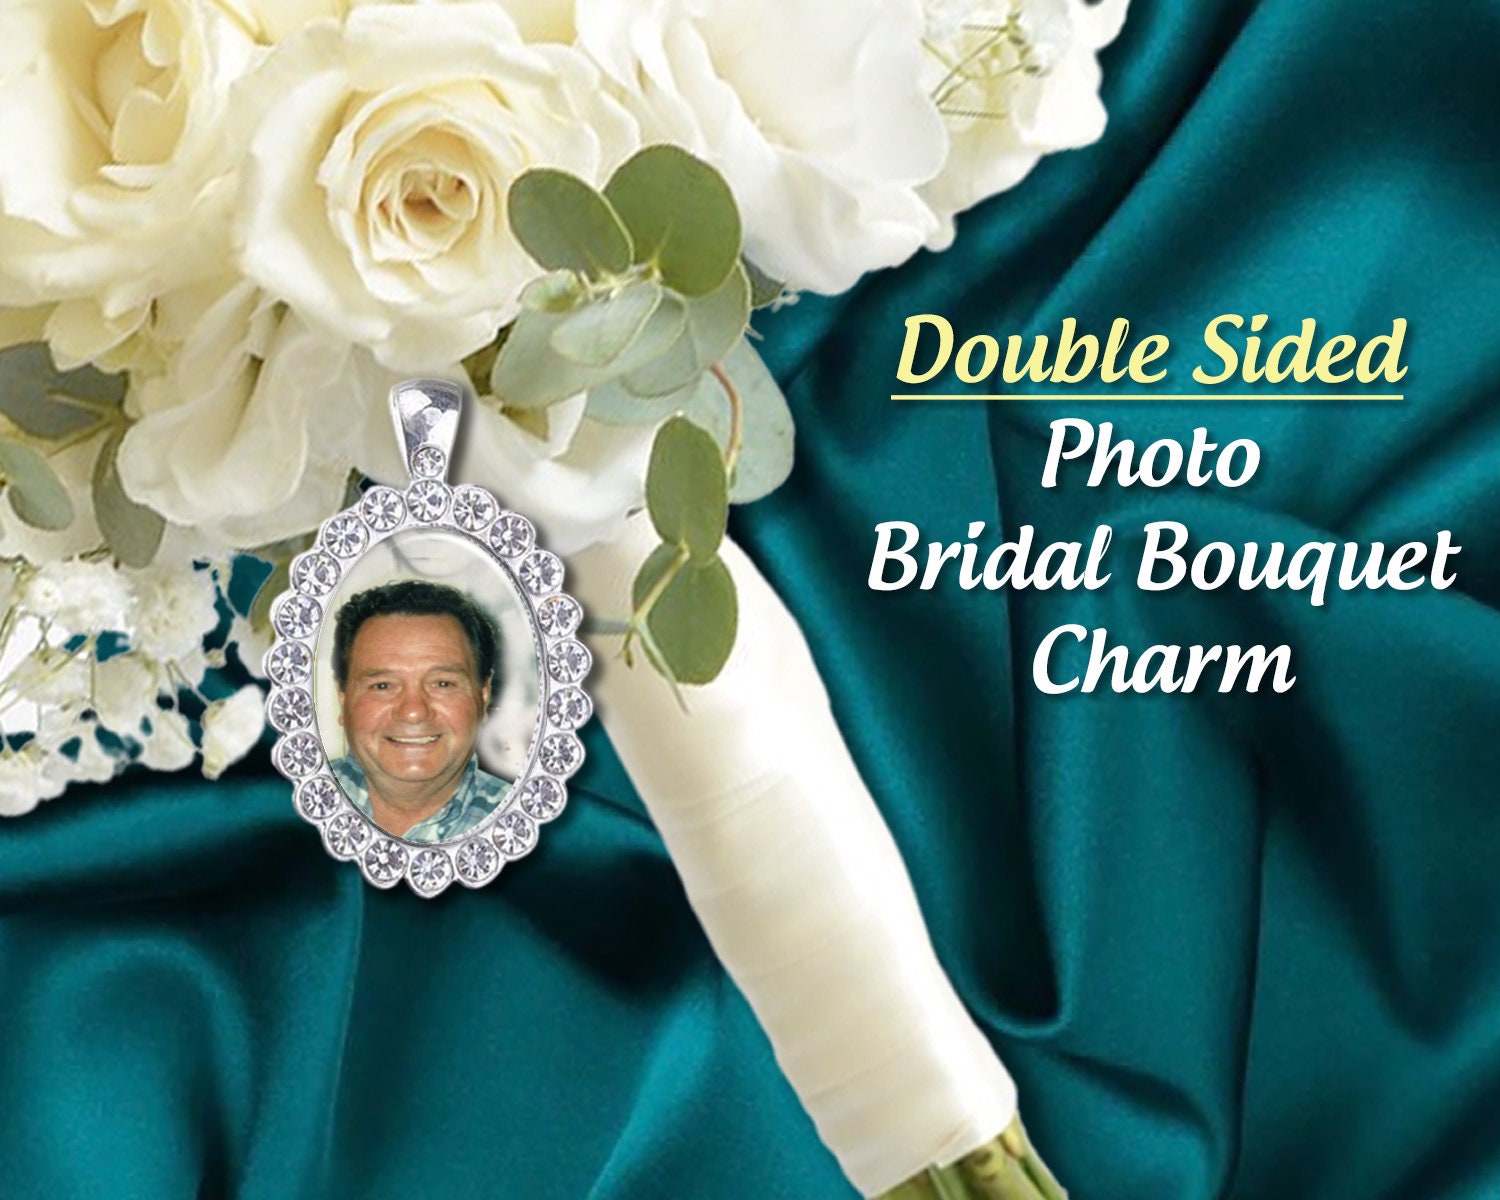 Memorial Photo Charm Bridal Bouquet, Wedding Bouquet Charms Memorial